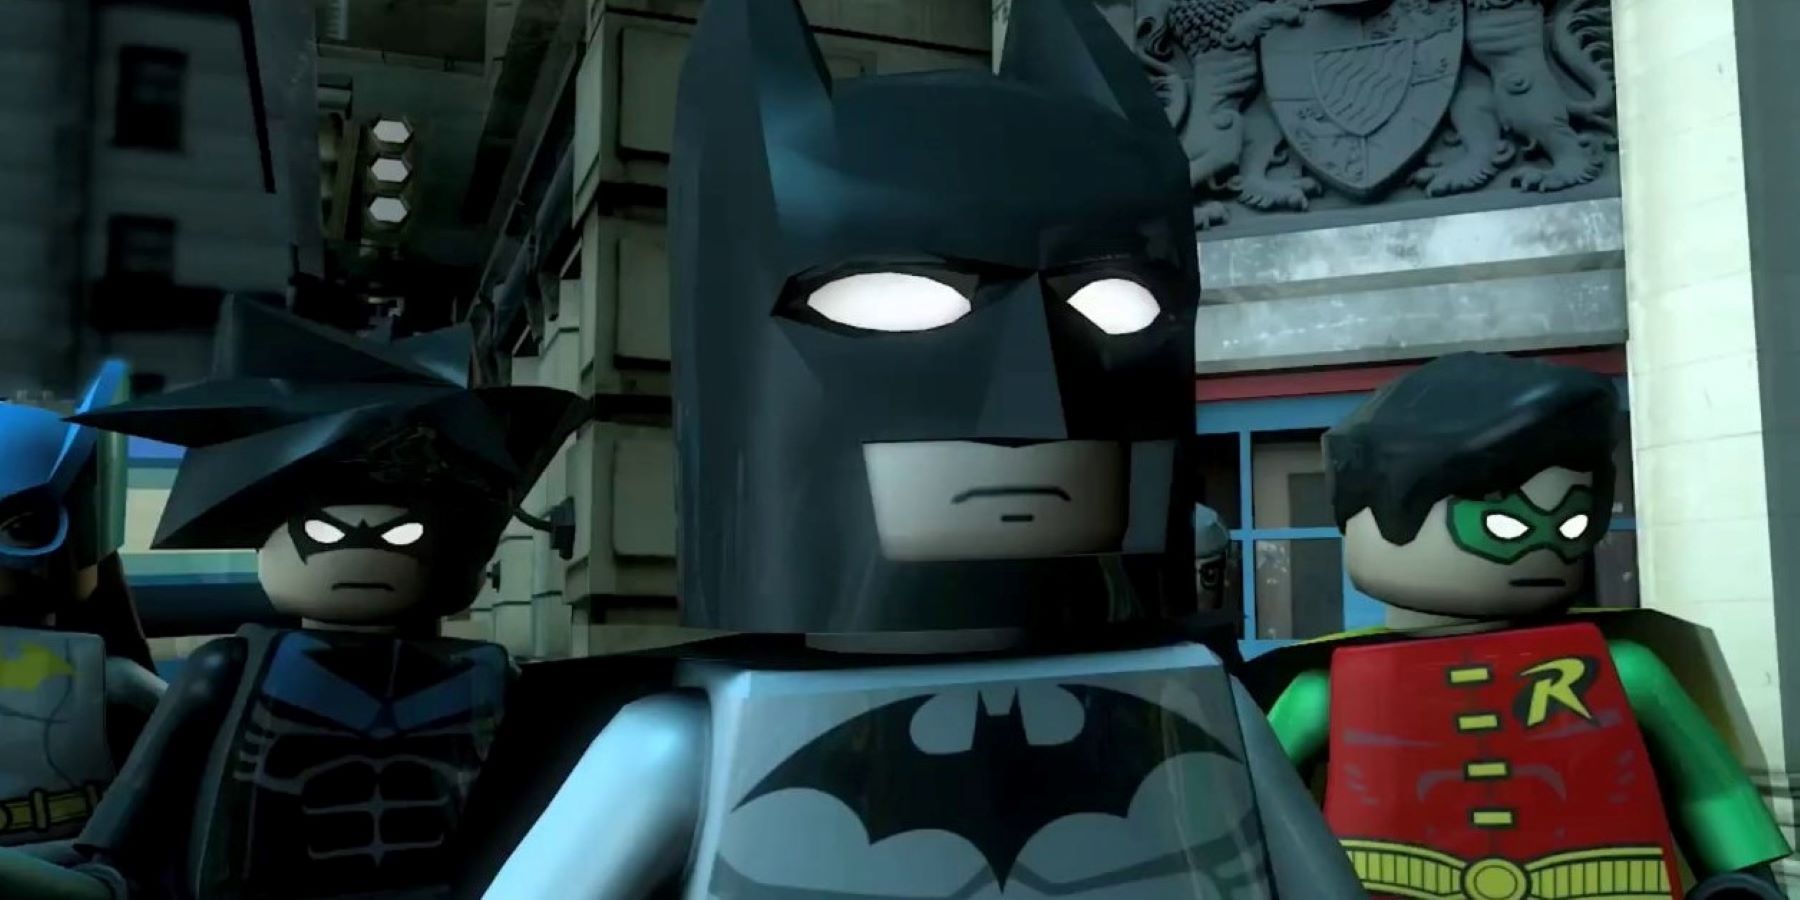 Batman, Batgirl, Nightwing, and Robin in a LEGO Batman game